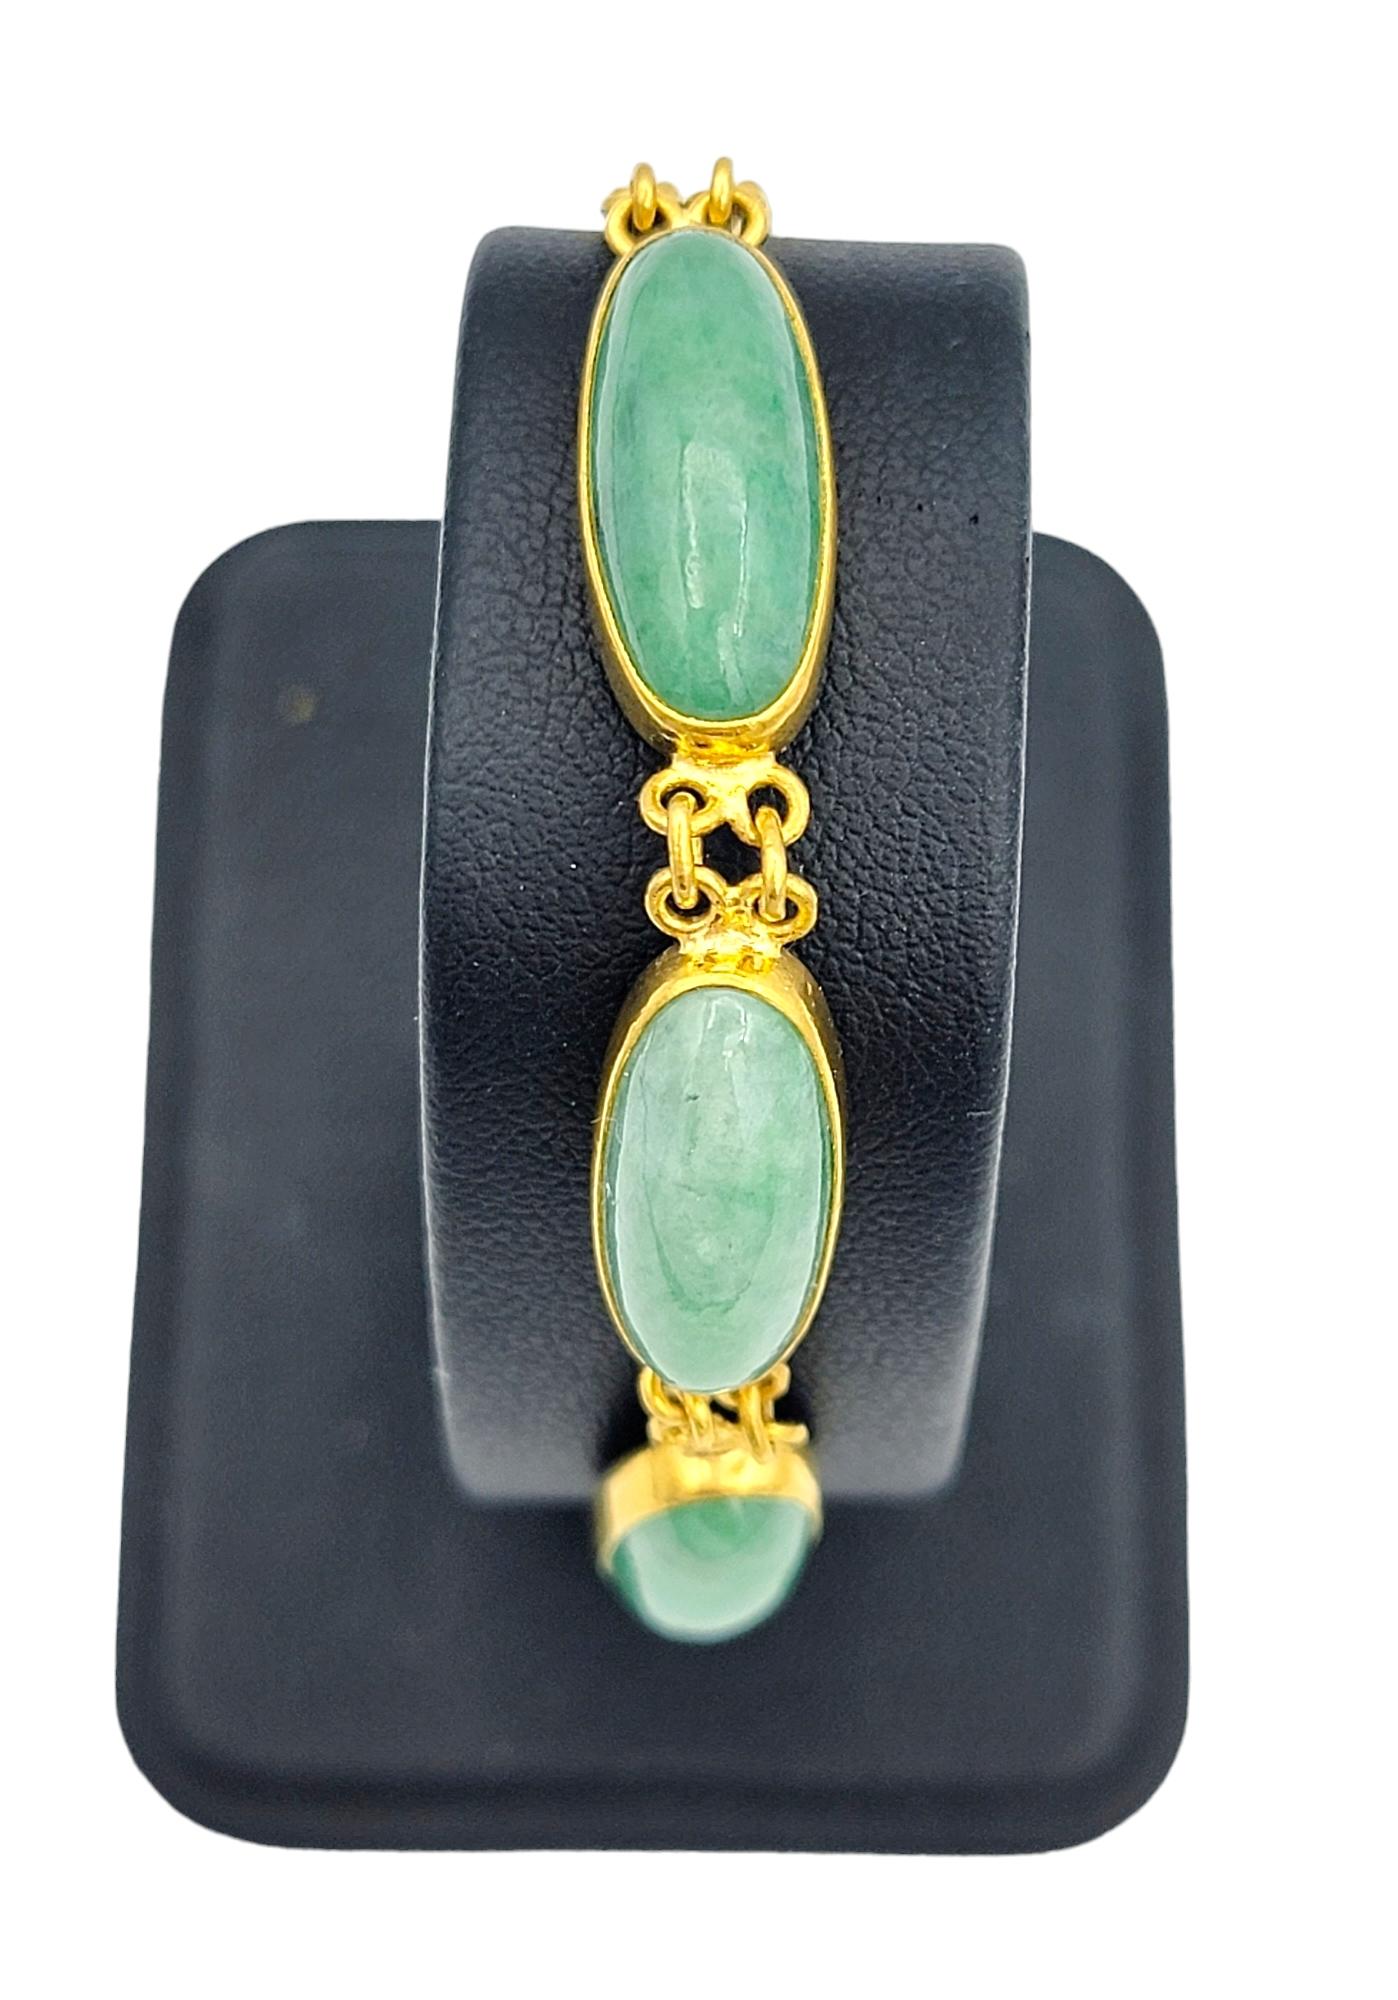 Elongated Oval Cabochon Jadeite Curb Link Bracelet Set in 24 Karat Yellow Gold  For Sale 7